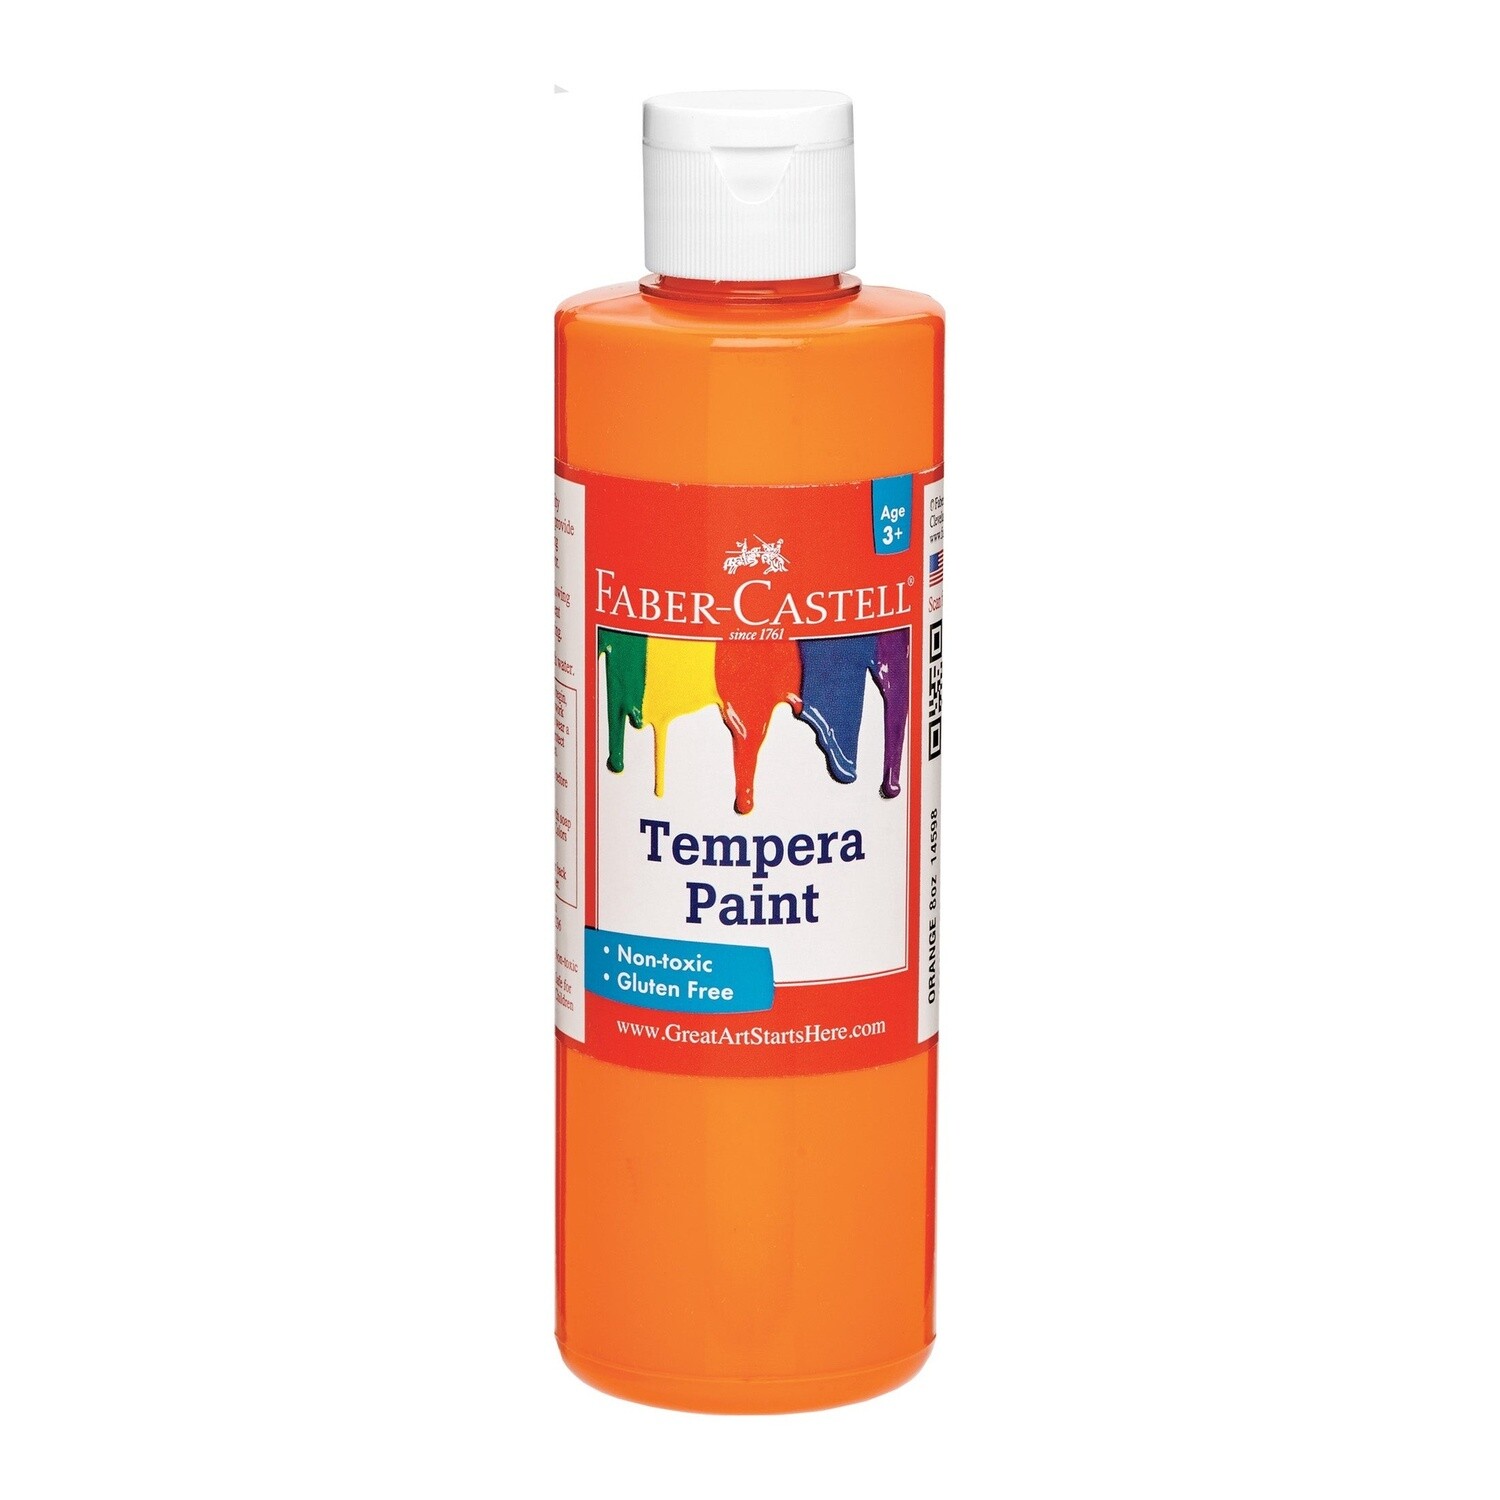 Faber-Castell Tempera Paint - Orange (8 oz bottles)